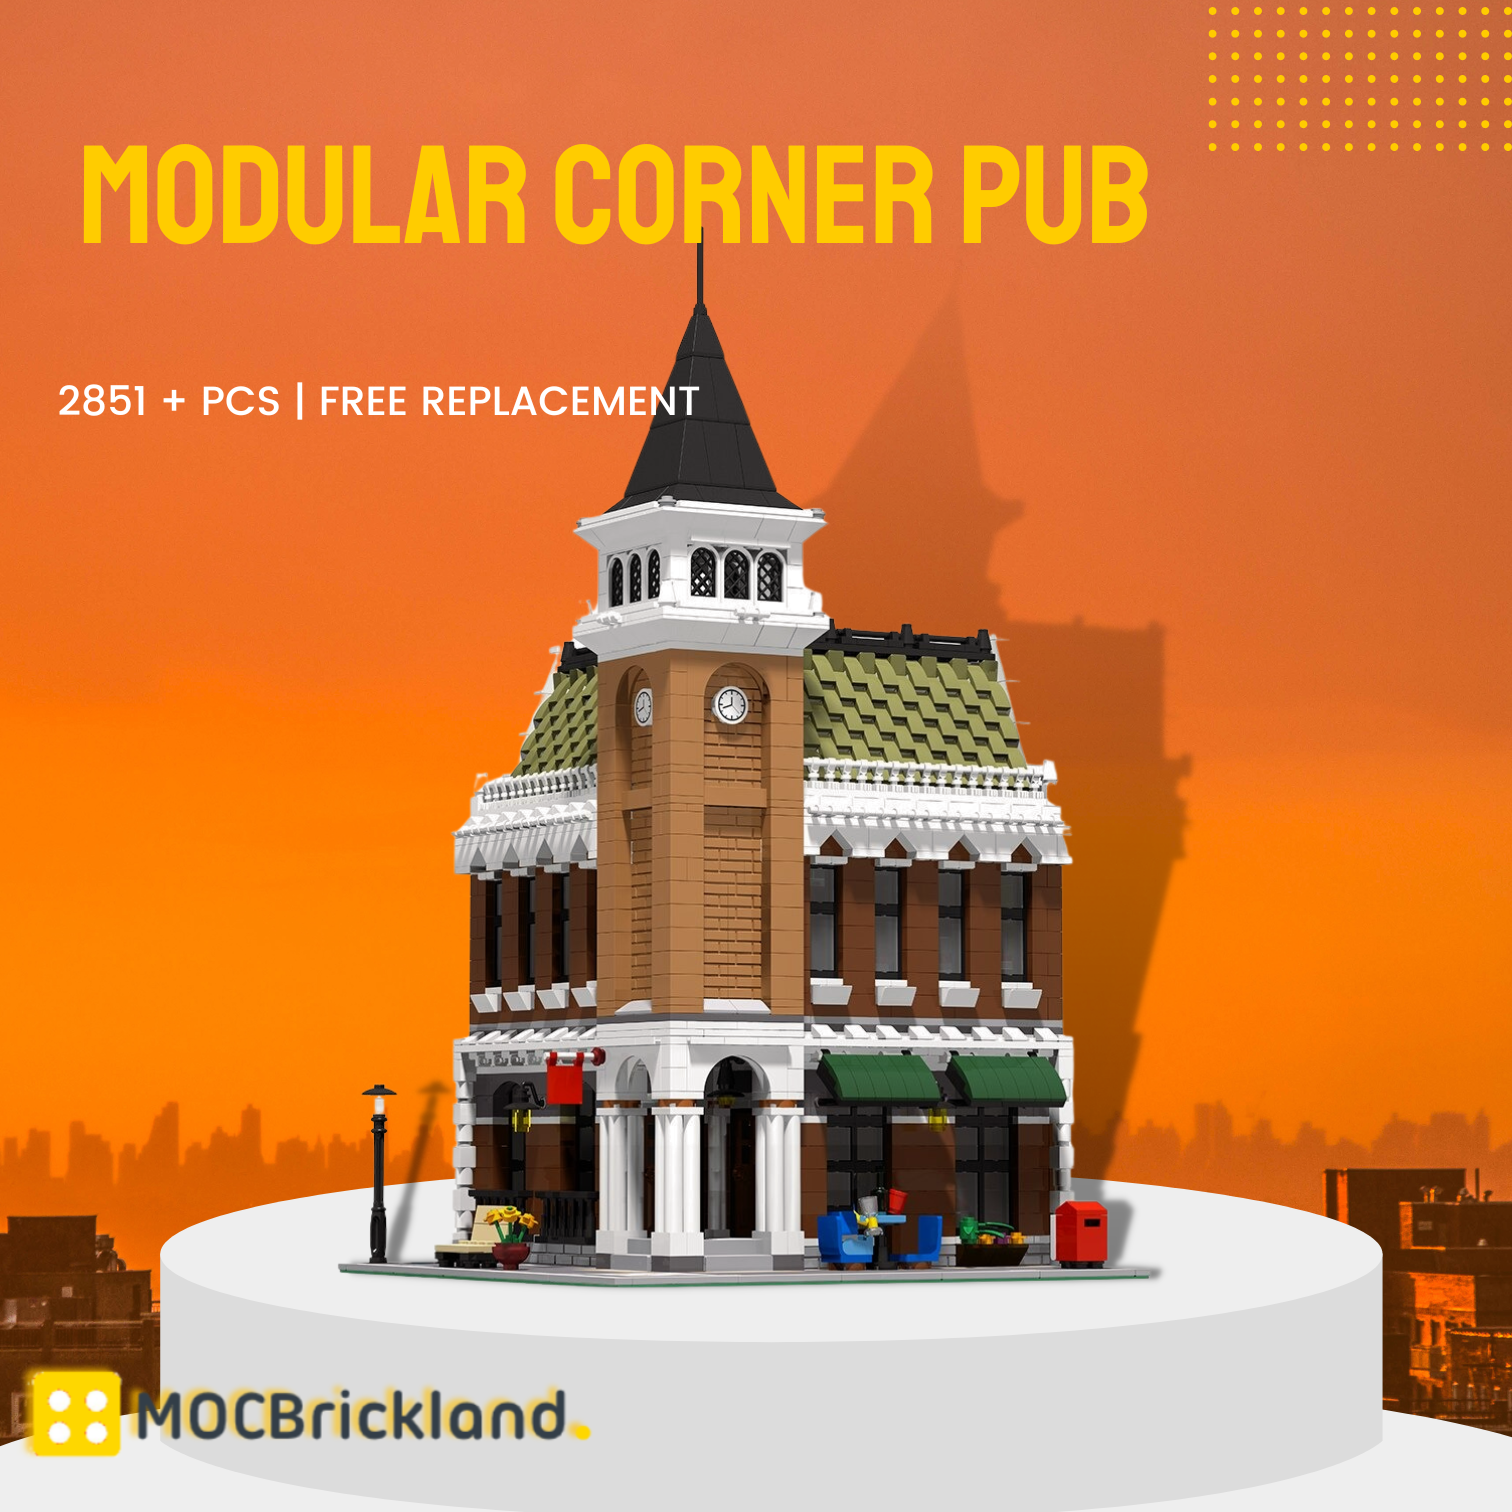 Modular Corner Pub MOC-118705 Modular Building With 2851 Pieces